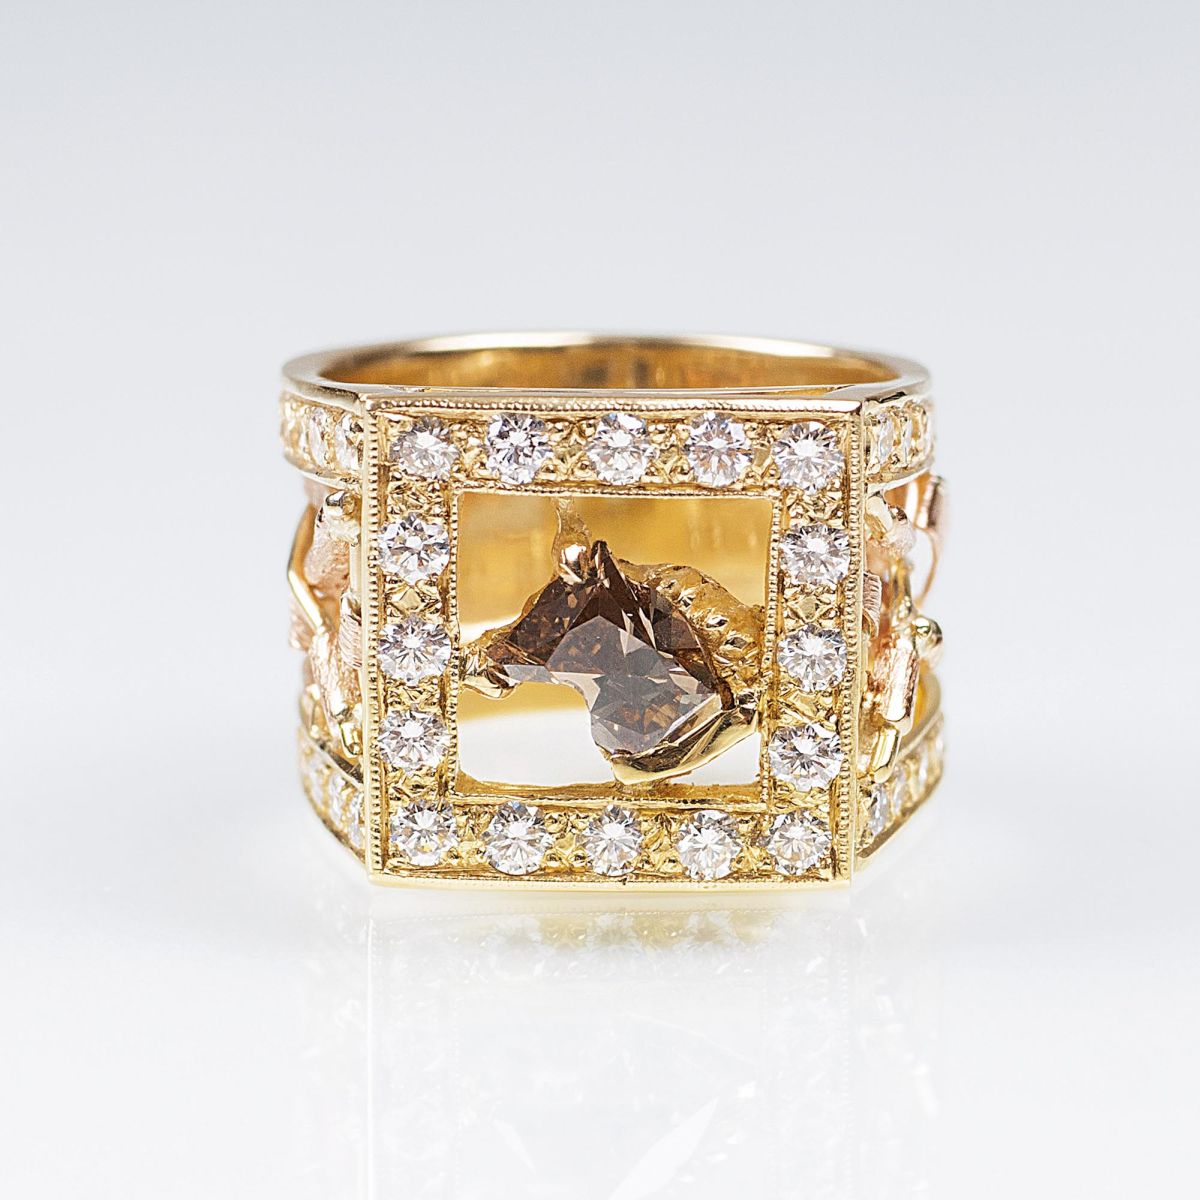 A Rare Diamond Ring with Horse Head Cut Diamond